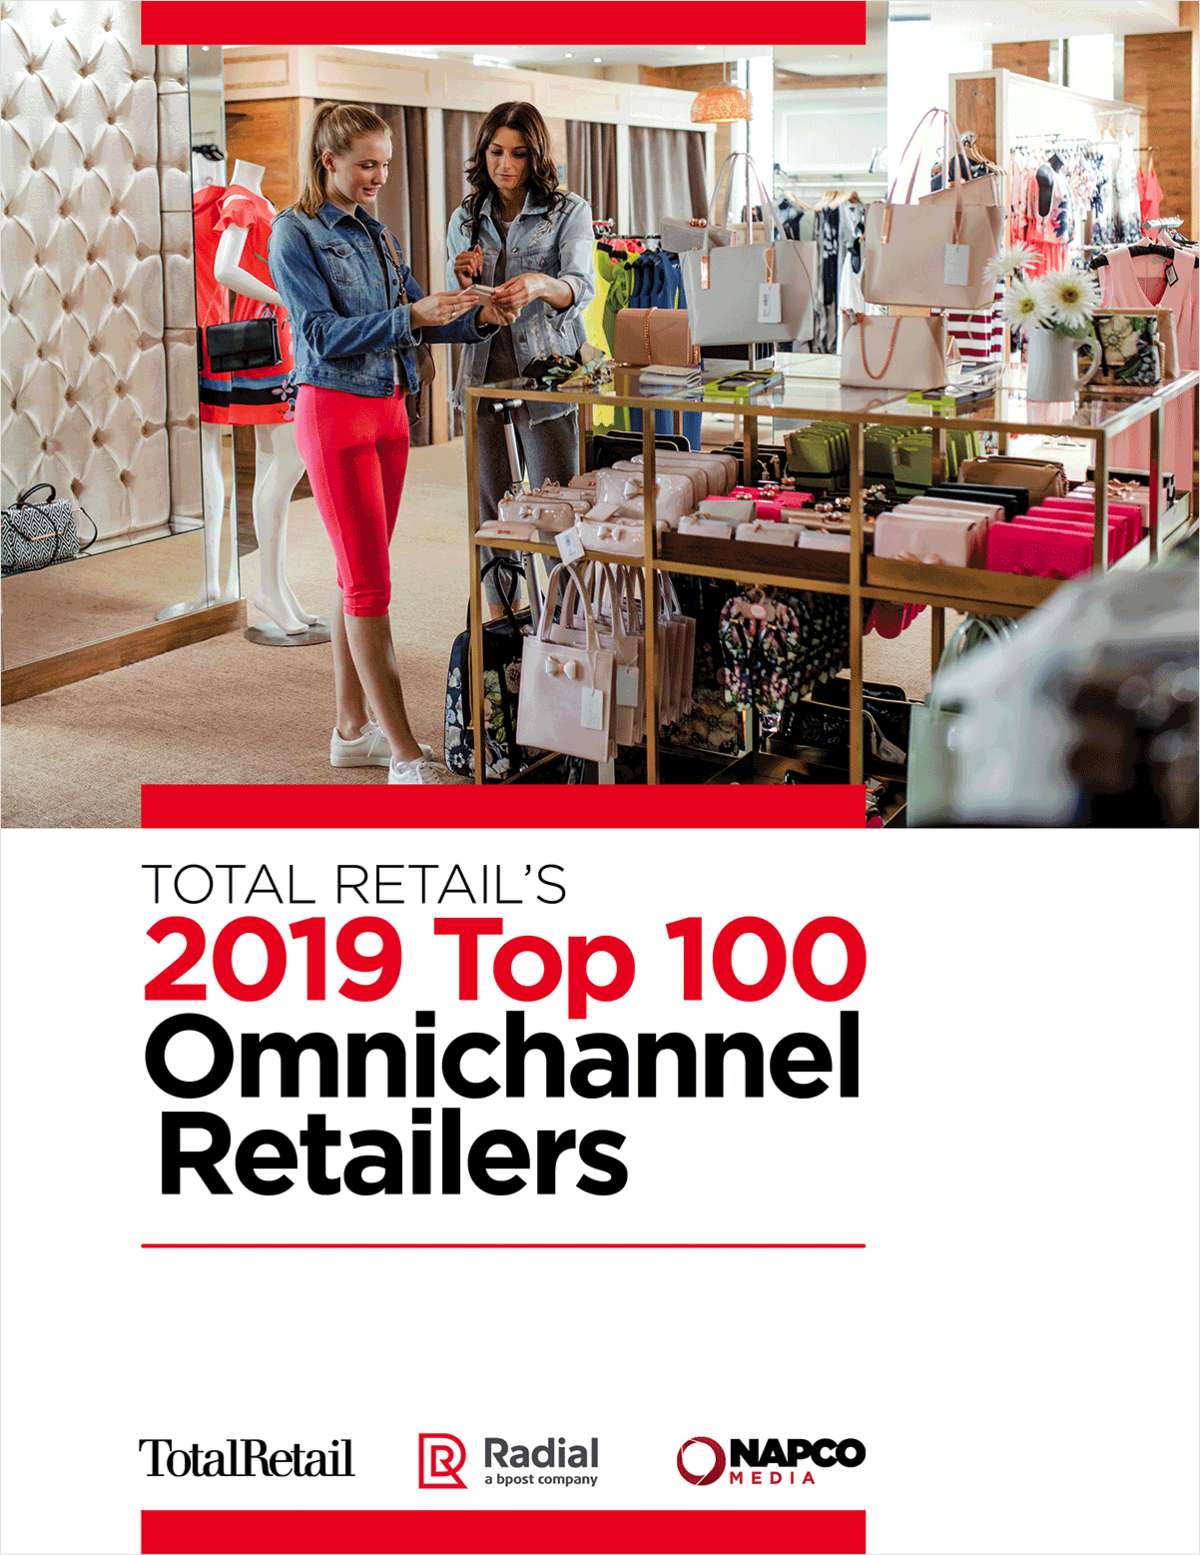 Total Retail's 2019 Top 100 Omnichannel Retailers